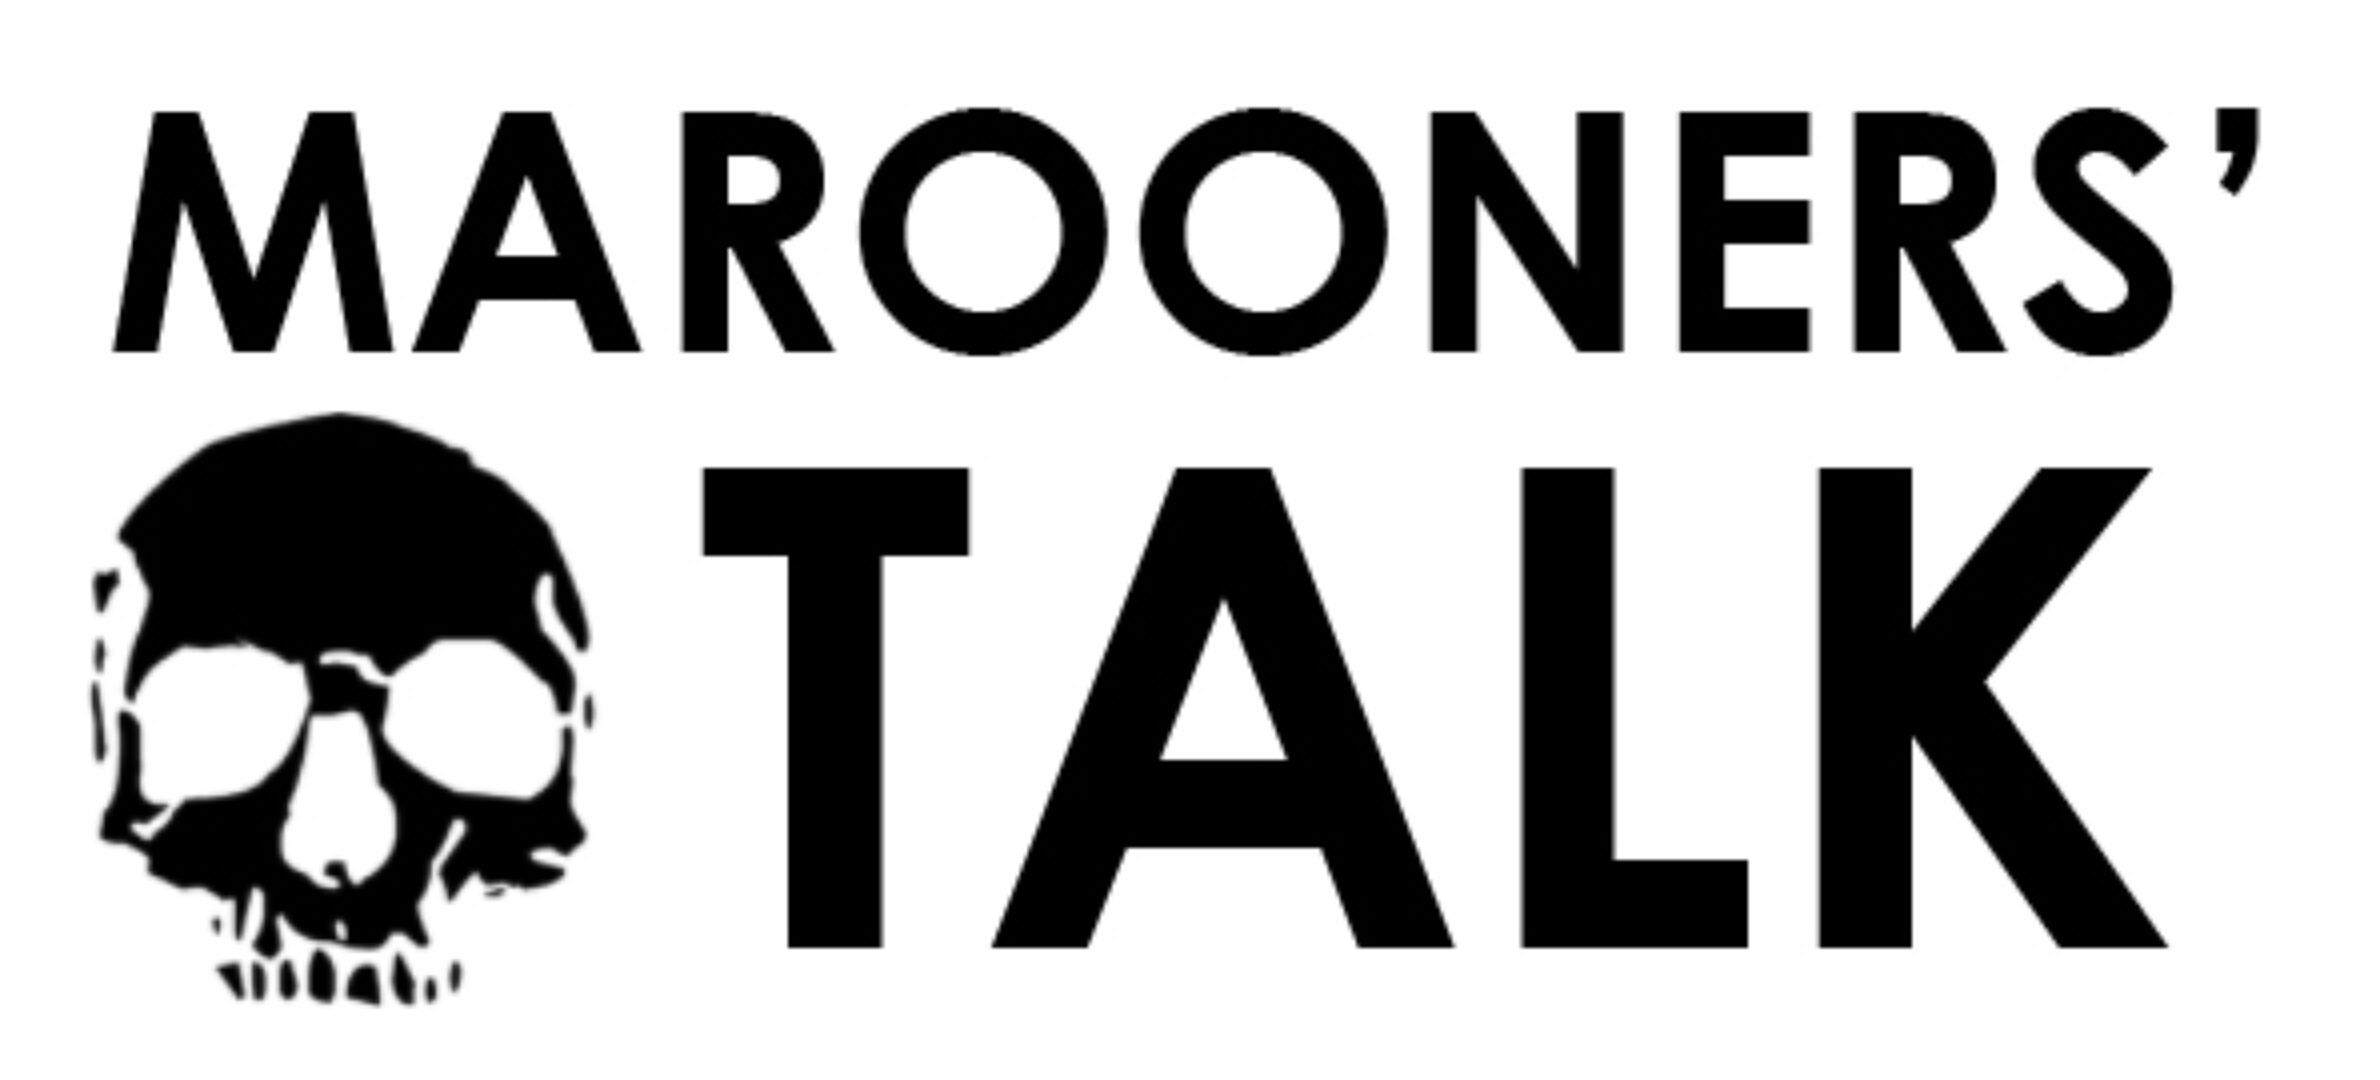 Marooners’ Talk: Episode 044 – “The 44(00)”